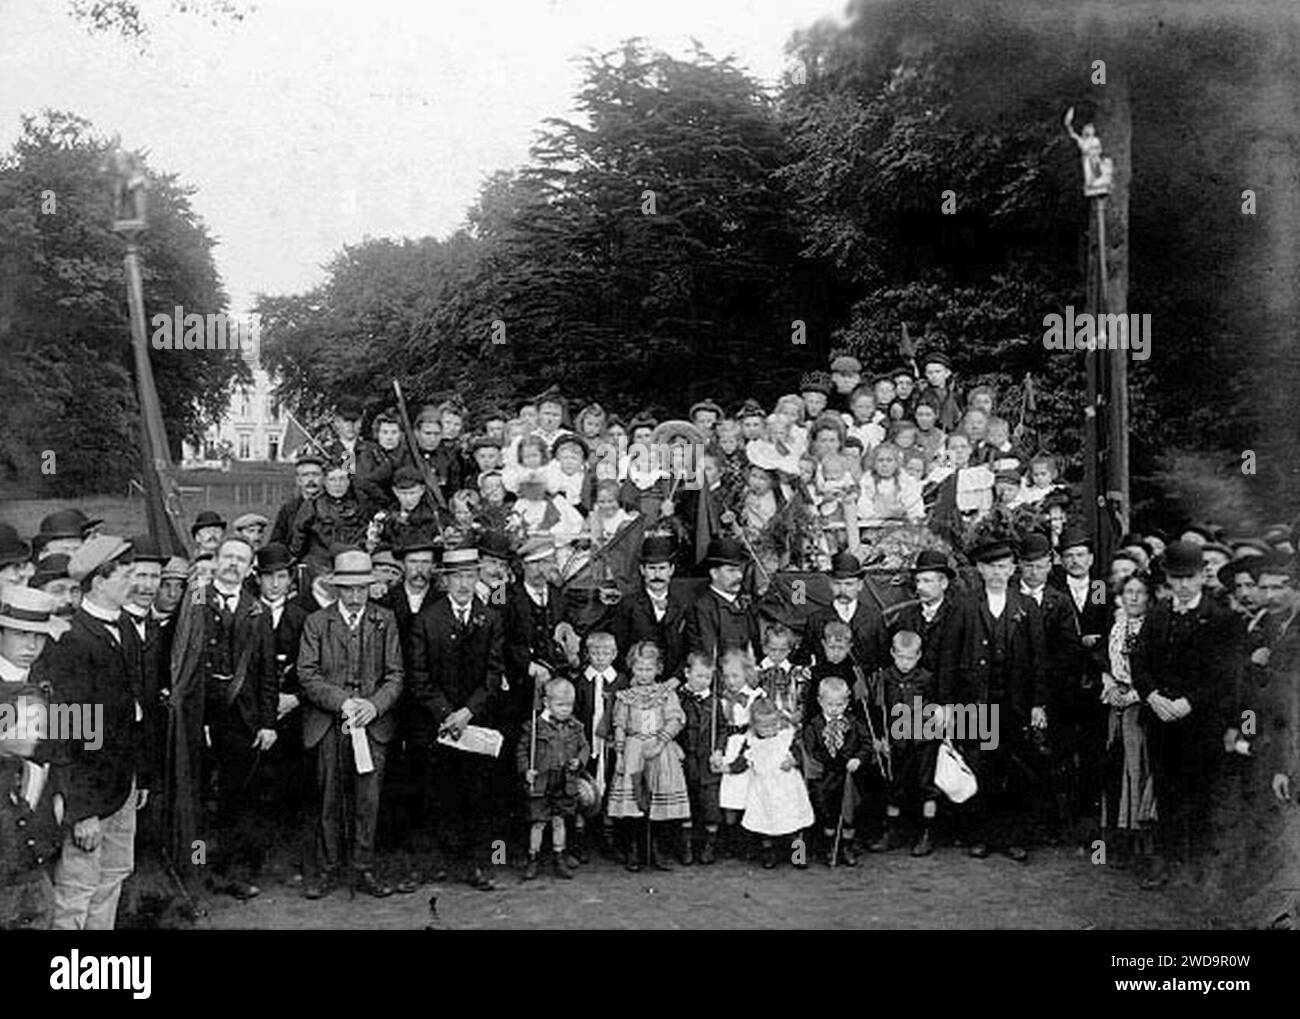 1907 strike at Beernaerts, Wetteren - strikers' children sent to foster parents, in front of the Beernaerts castle. Stock Photo